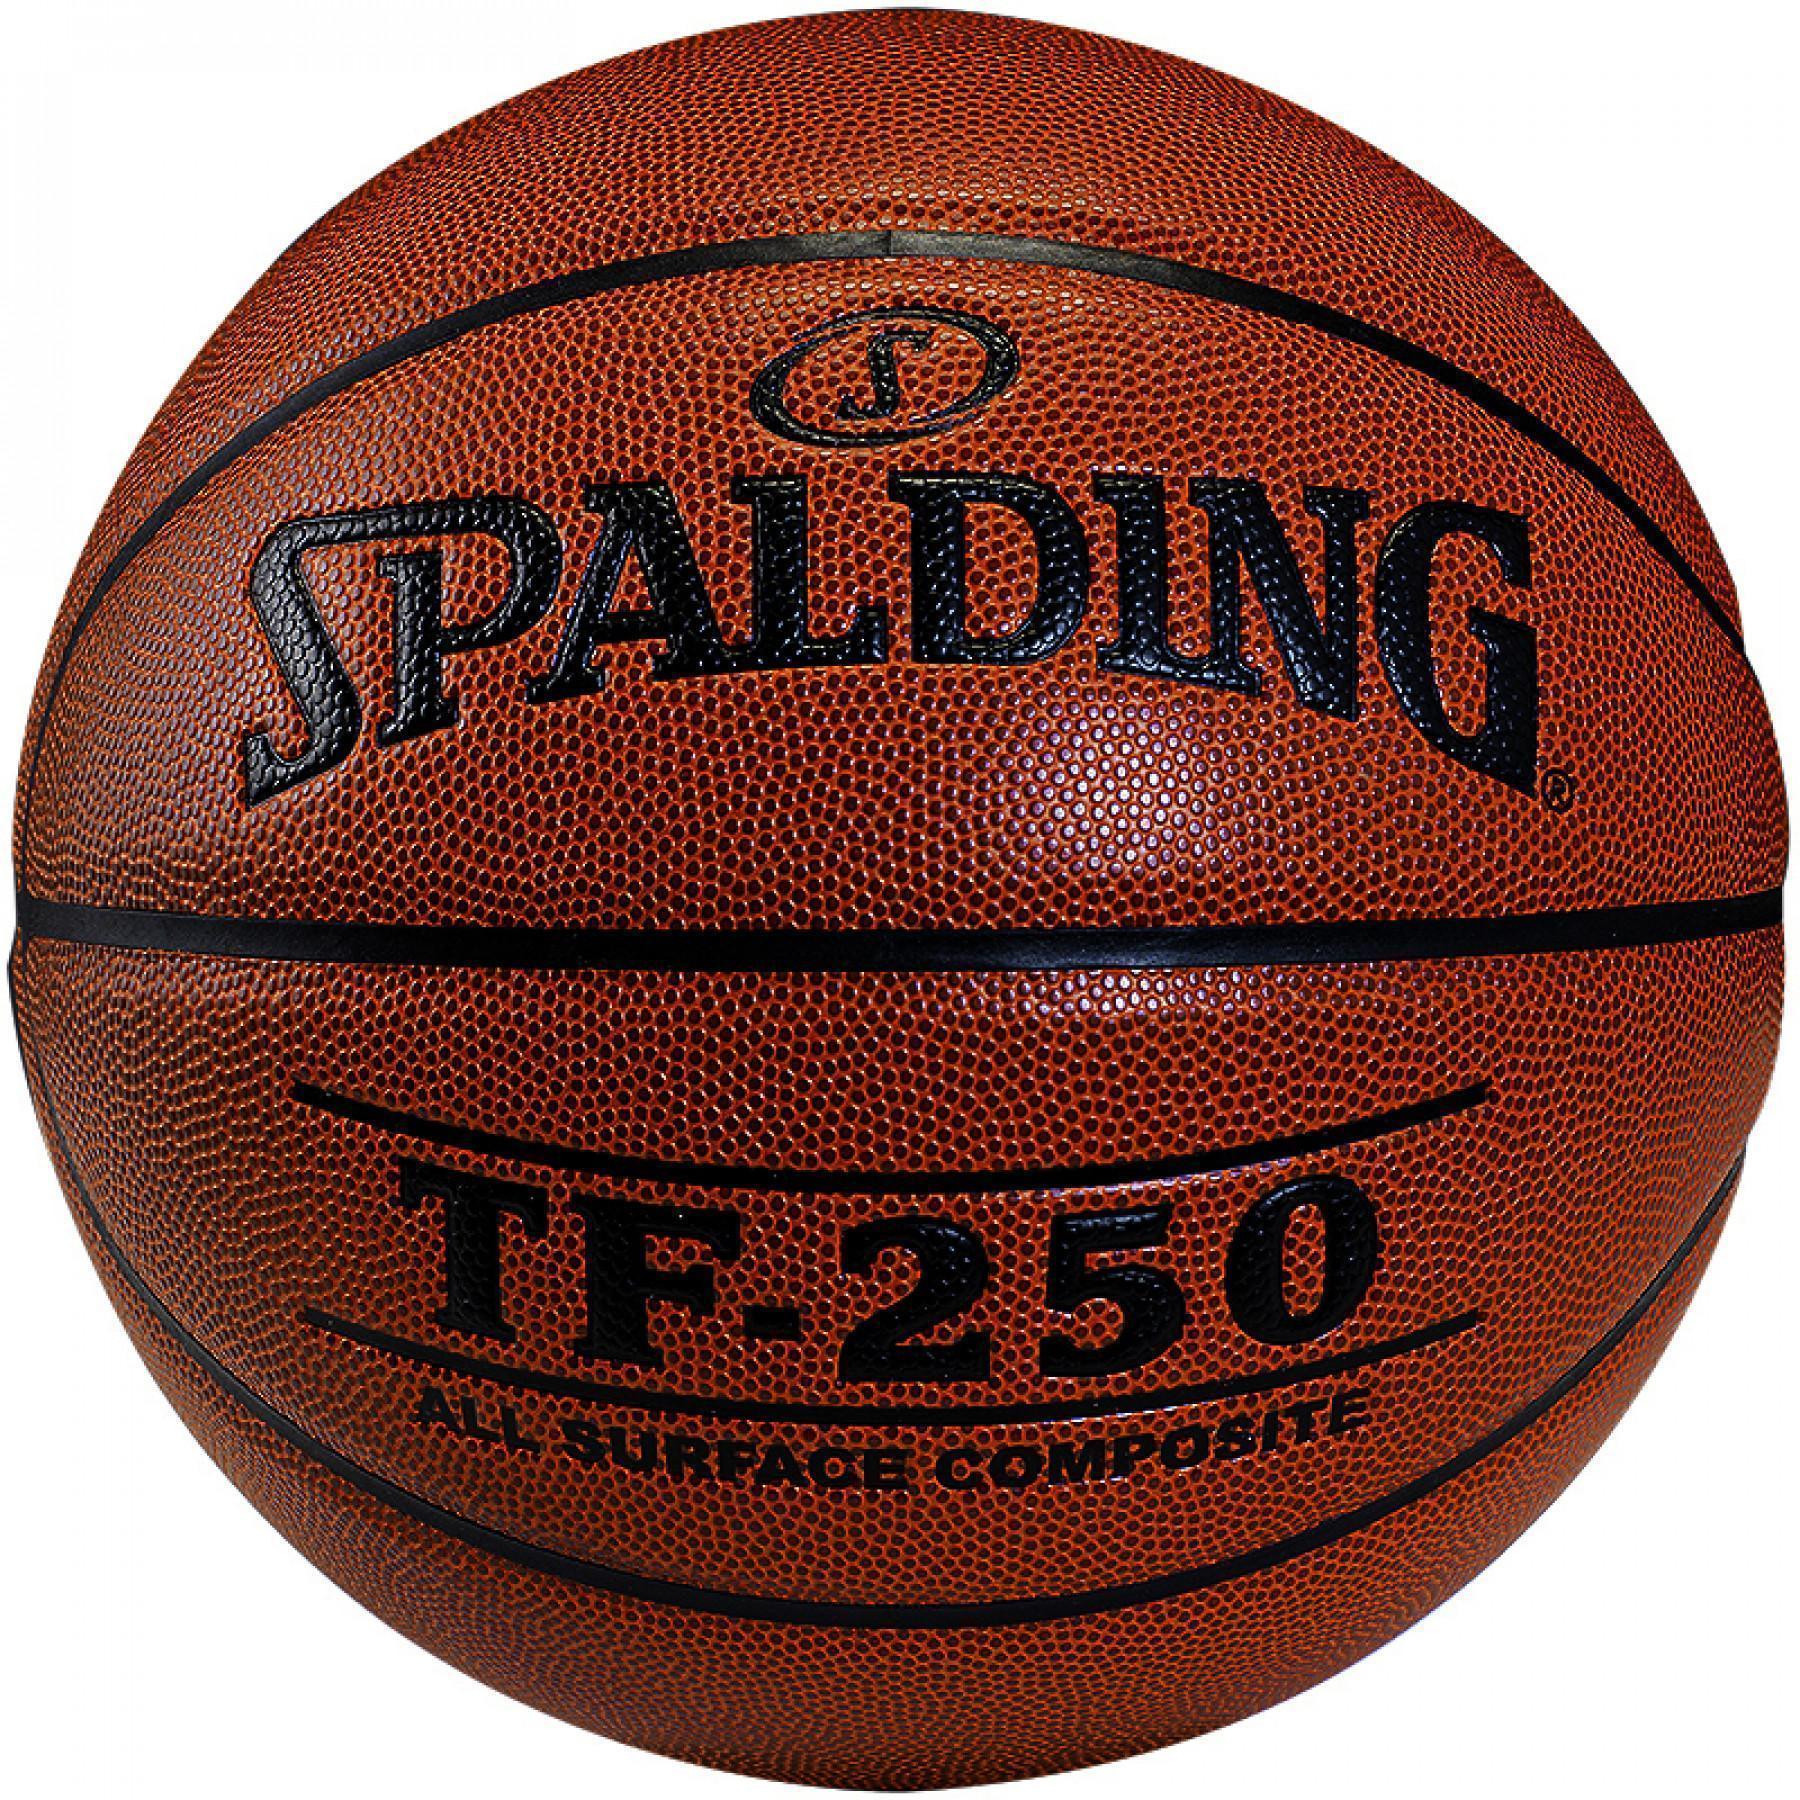 Ballon Spalding TF250 indoor/outdoor